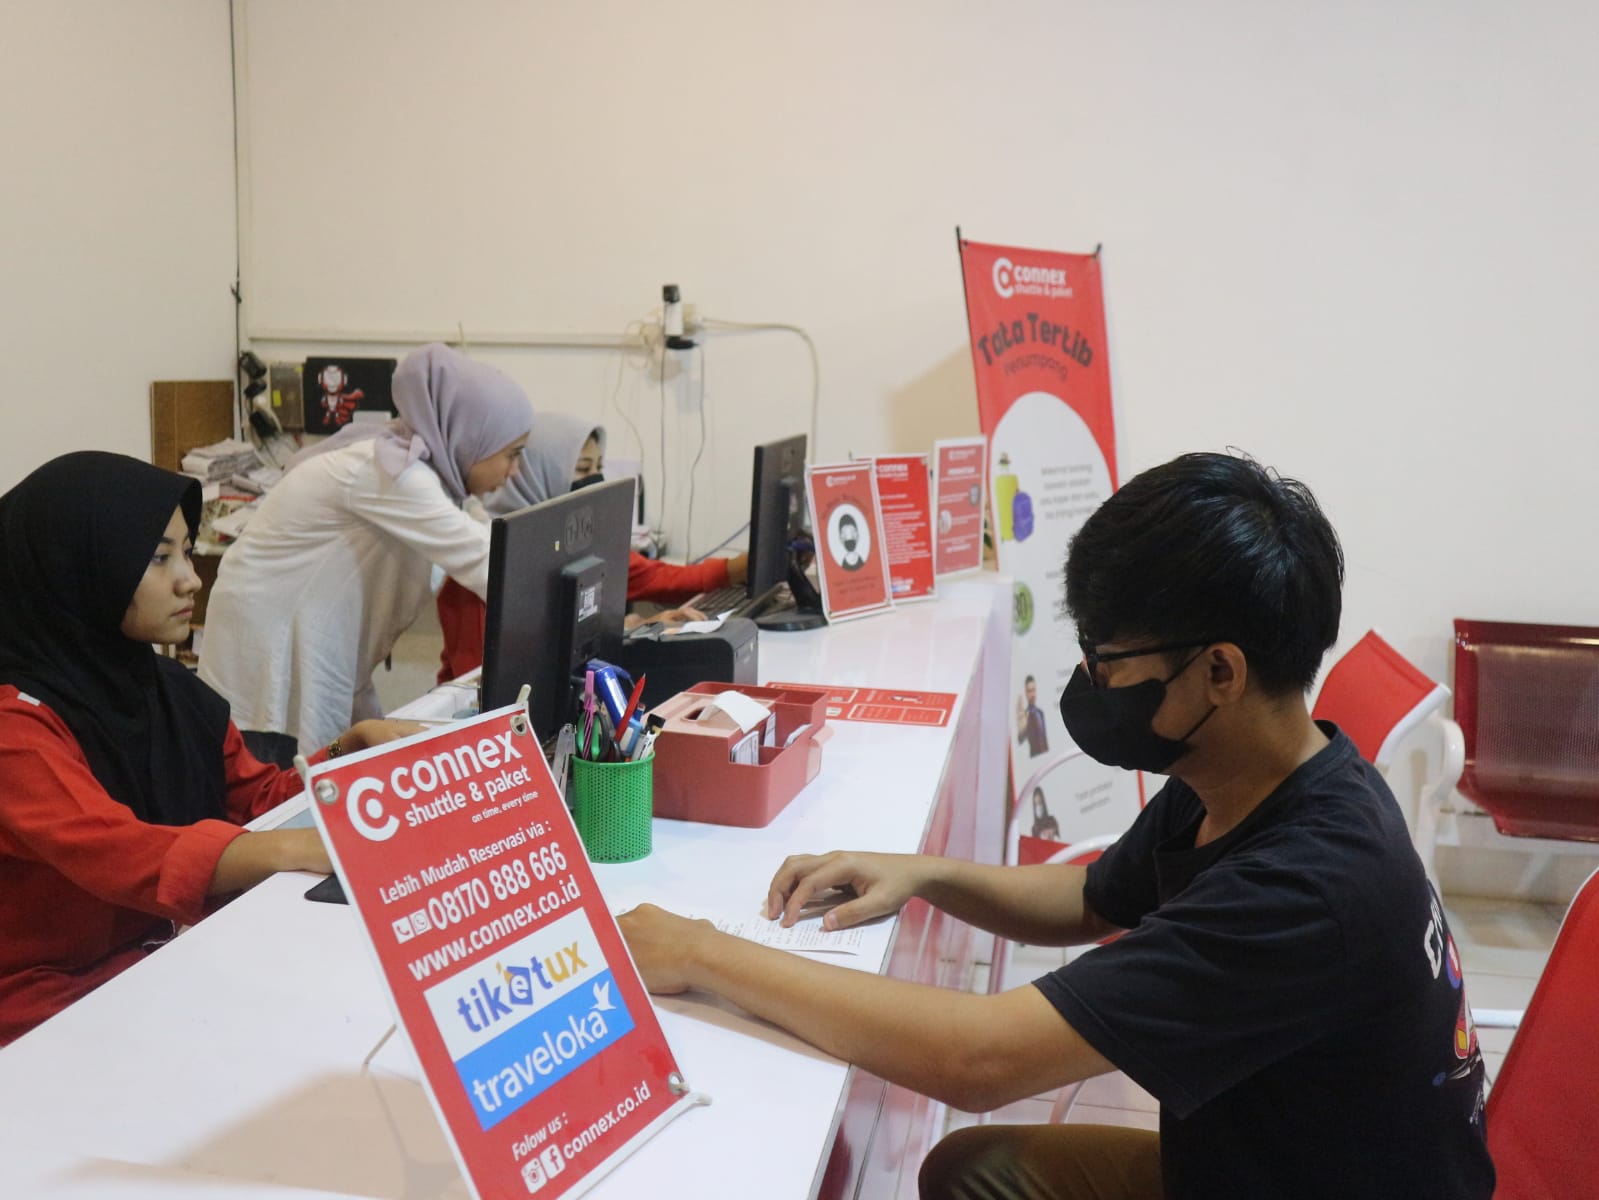 Connex Shuttle Alihkan Semua Perjalanan ke Bandung via Tol Cisumdawu, Lebih Hemat Waktu